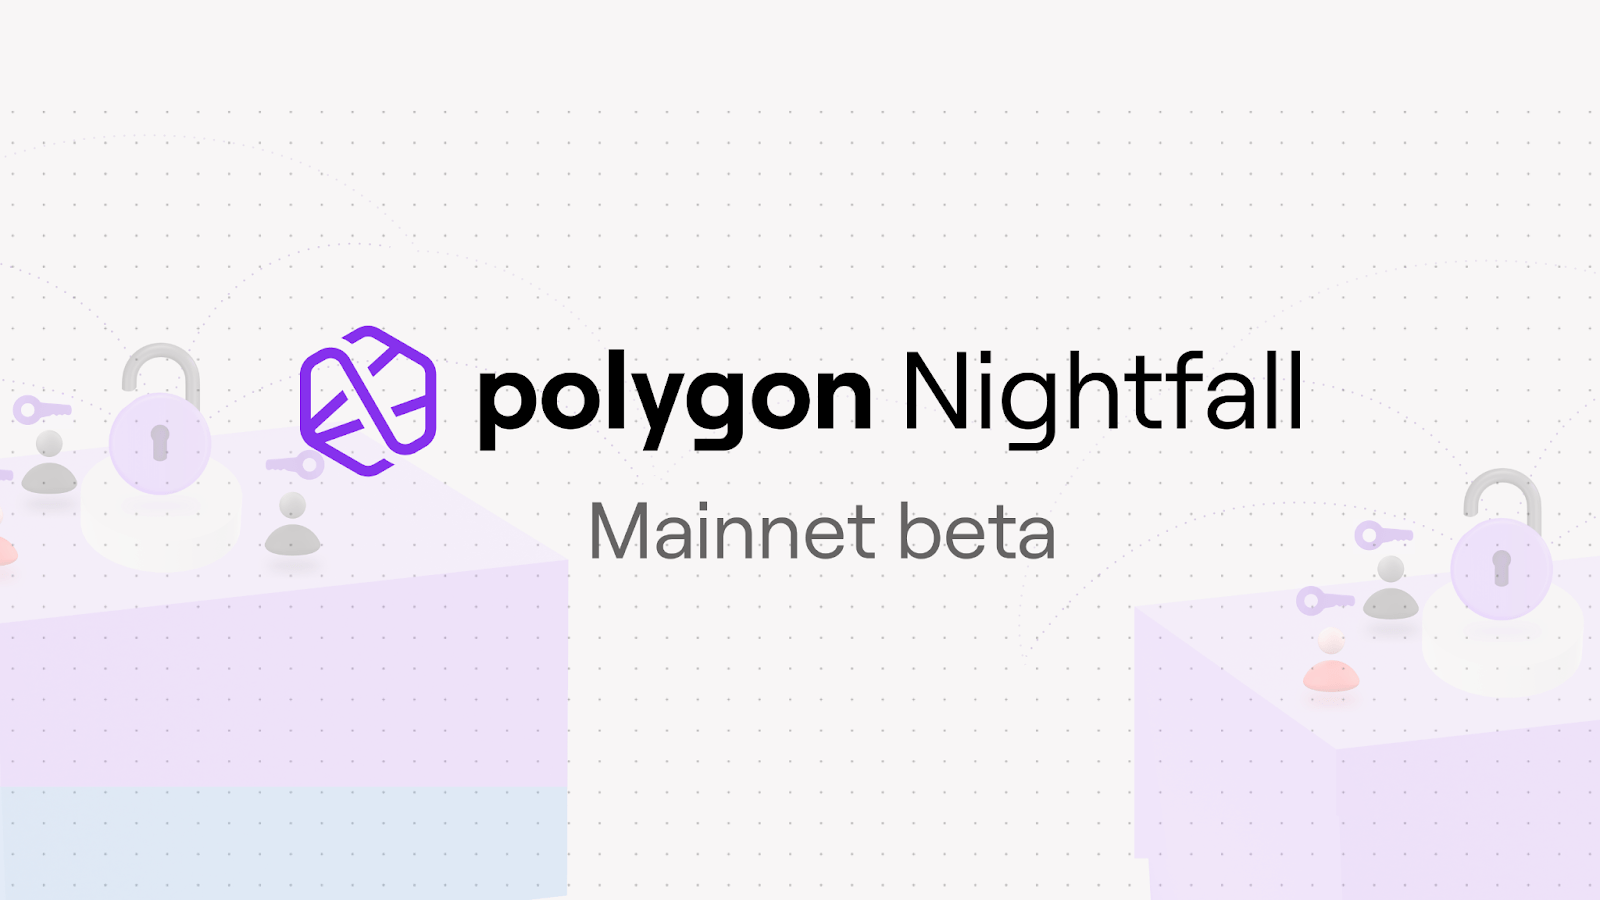 Polygon releases Beta Mainnet Nightfall